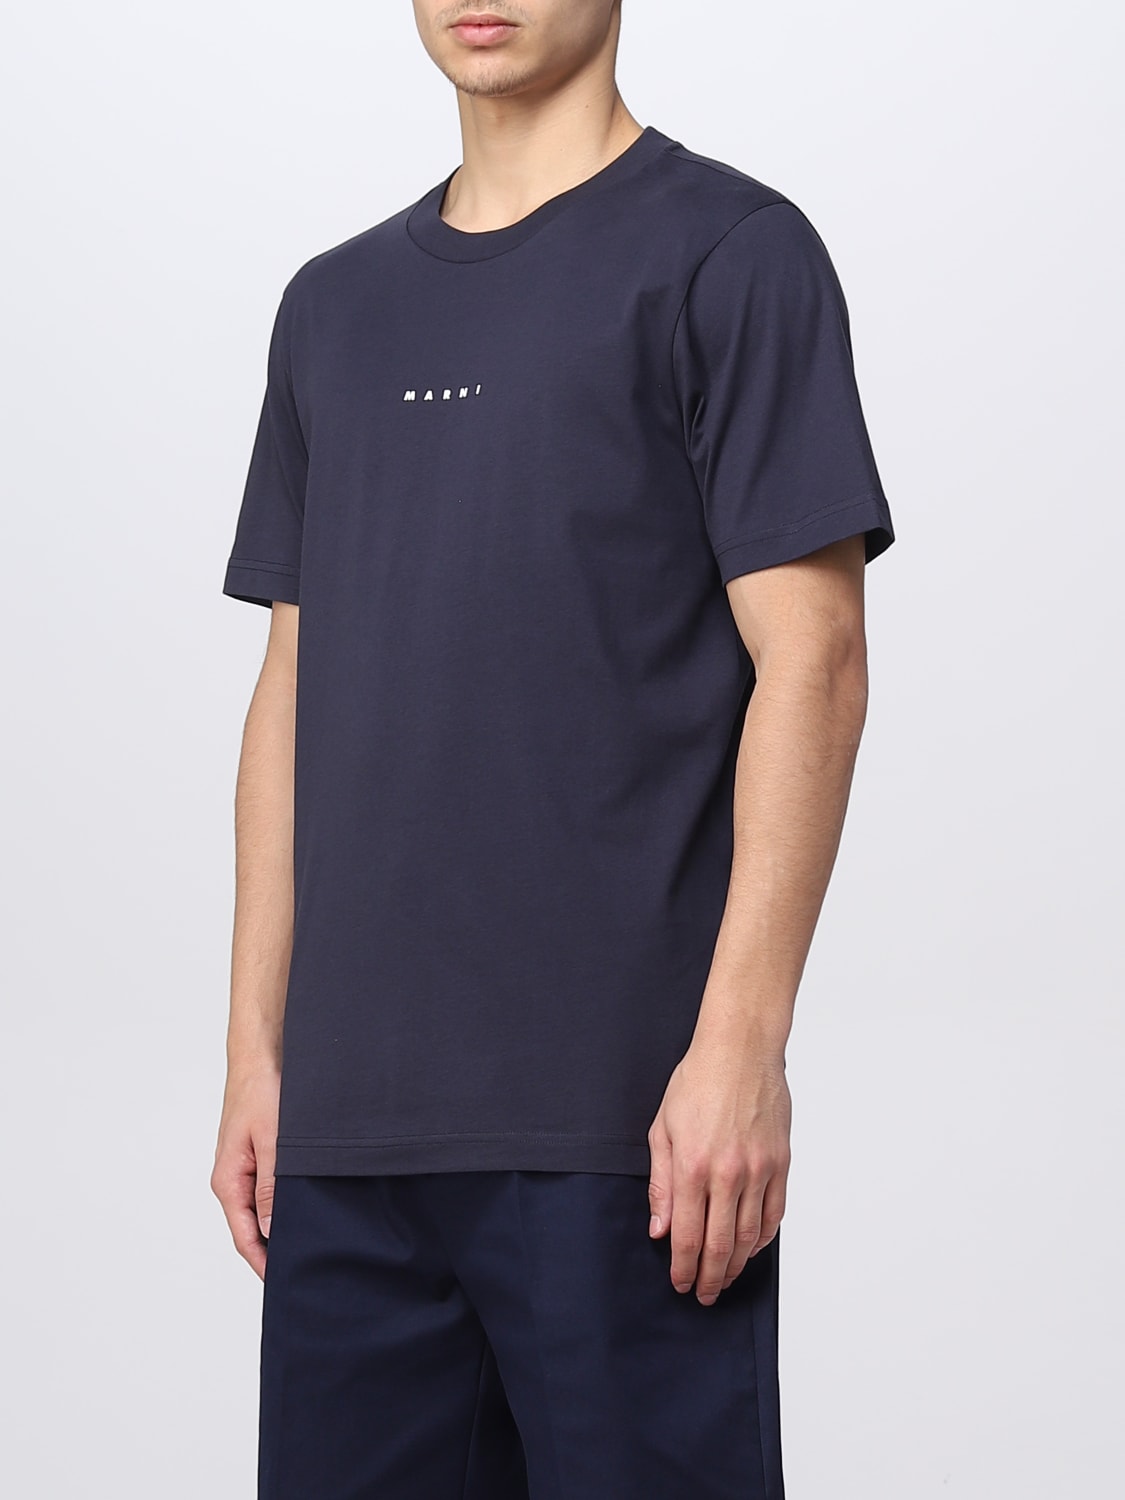 MARNI：Tシャツ メンズ - ブルー | GIGLIO.COMオンラインのMarni T